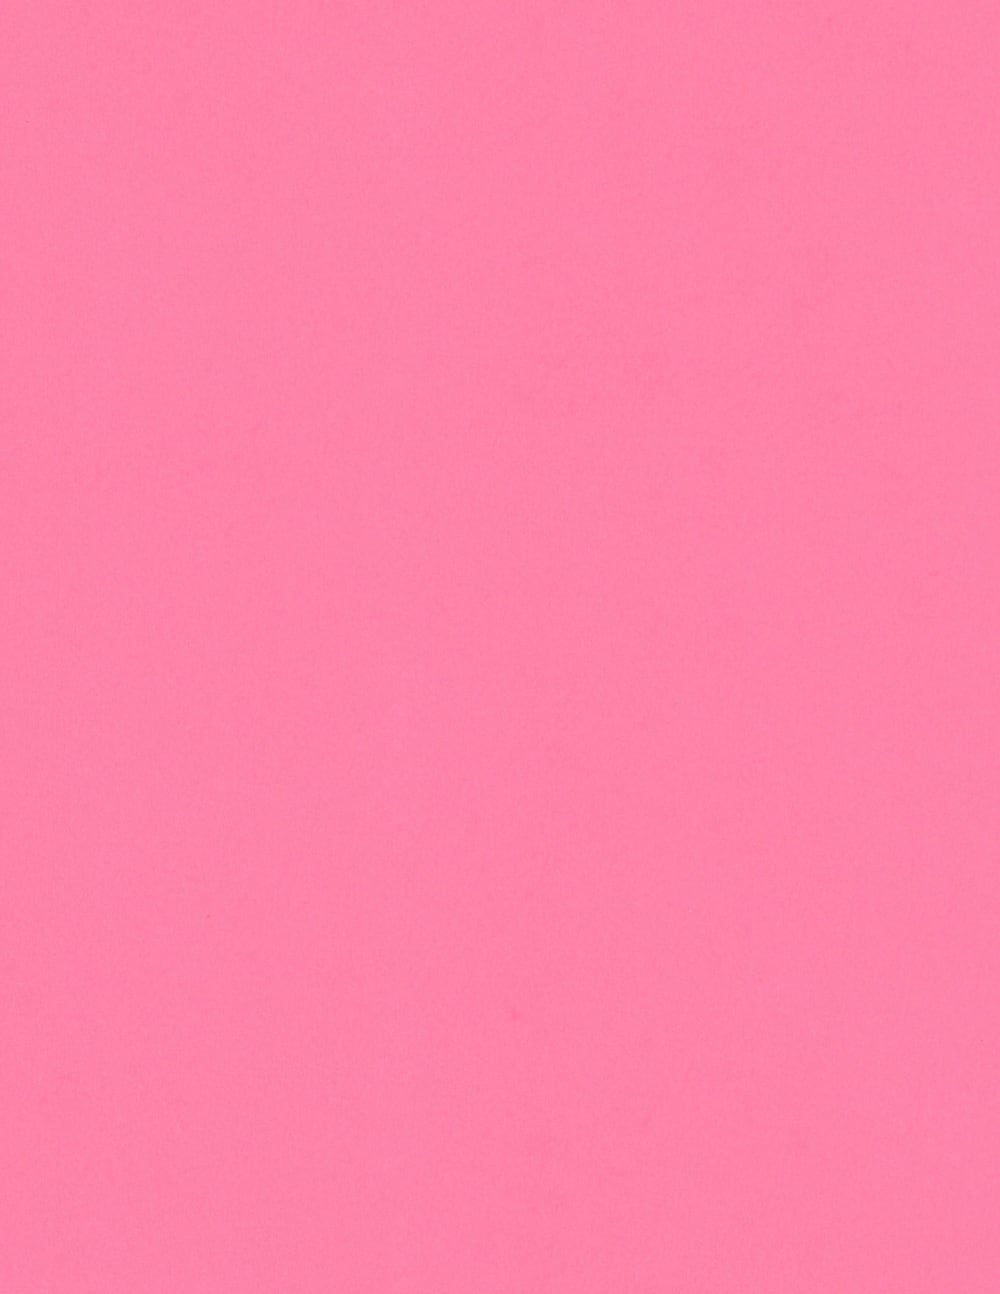 Lessebo Flamingo Pink Cardstock Paper 8.5 x 11